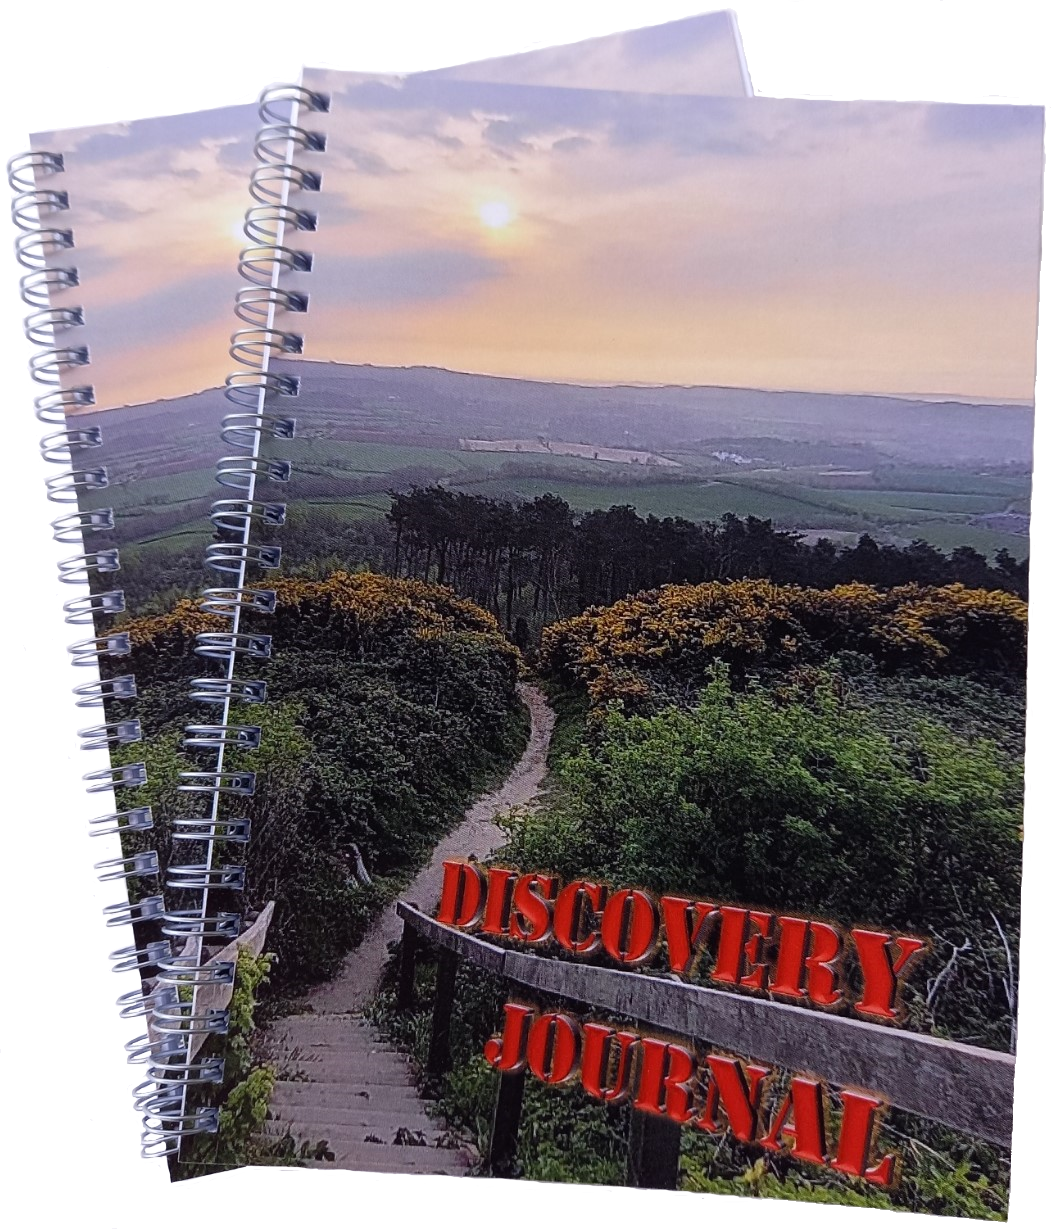 The discovery journal spiral-bound workbook 